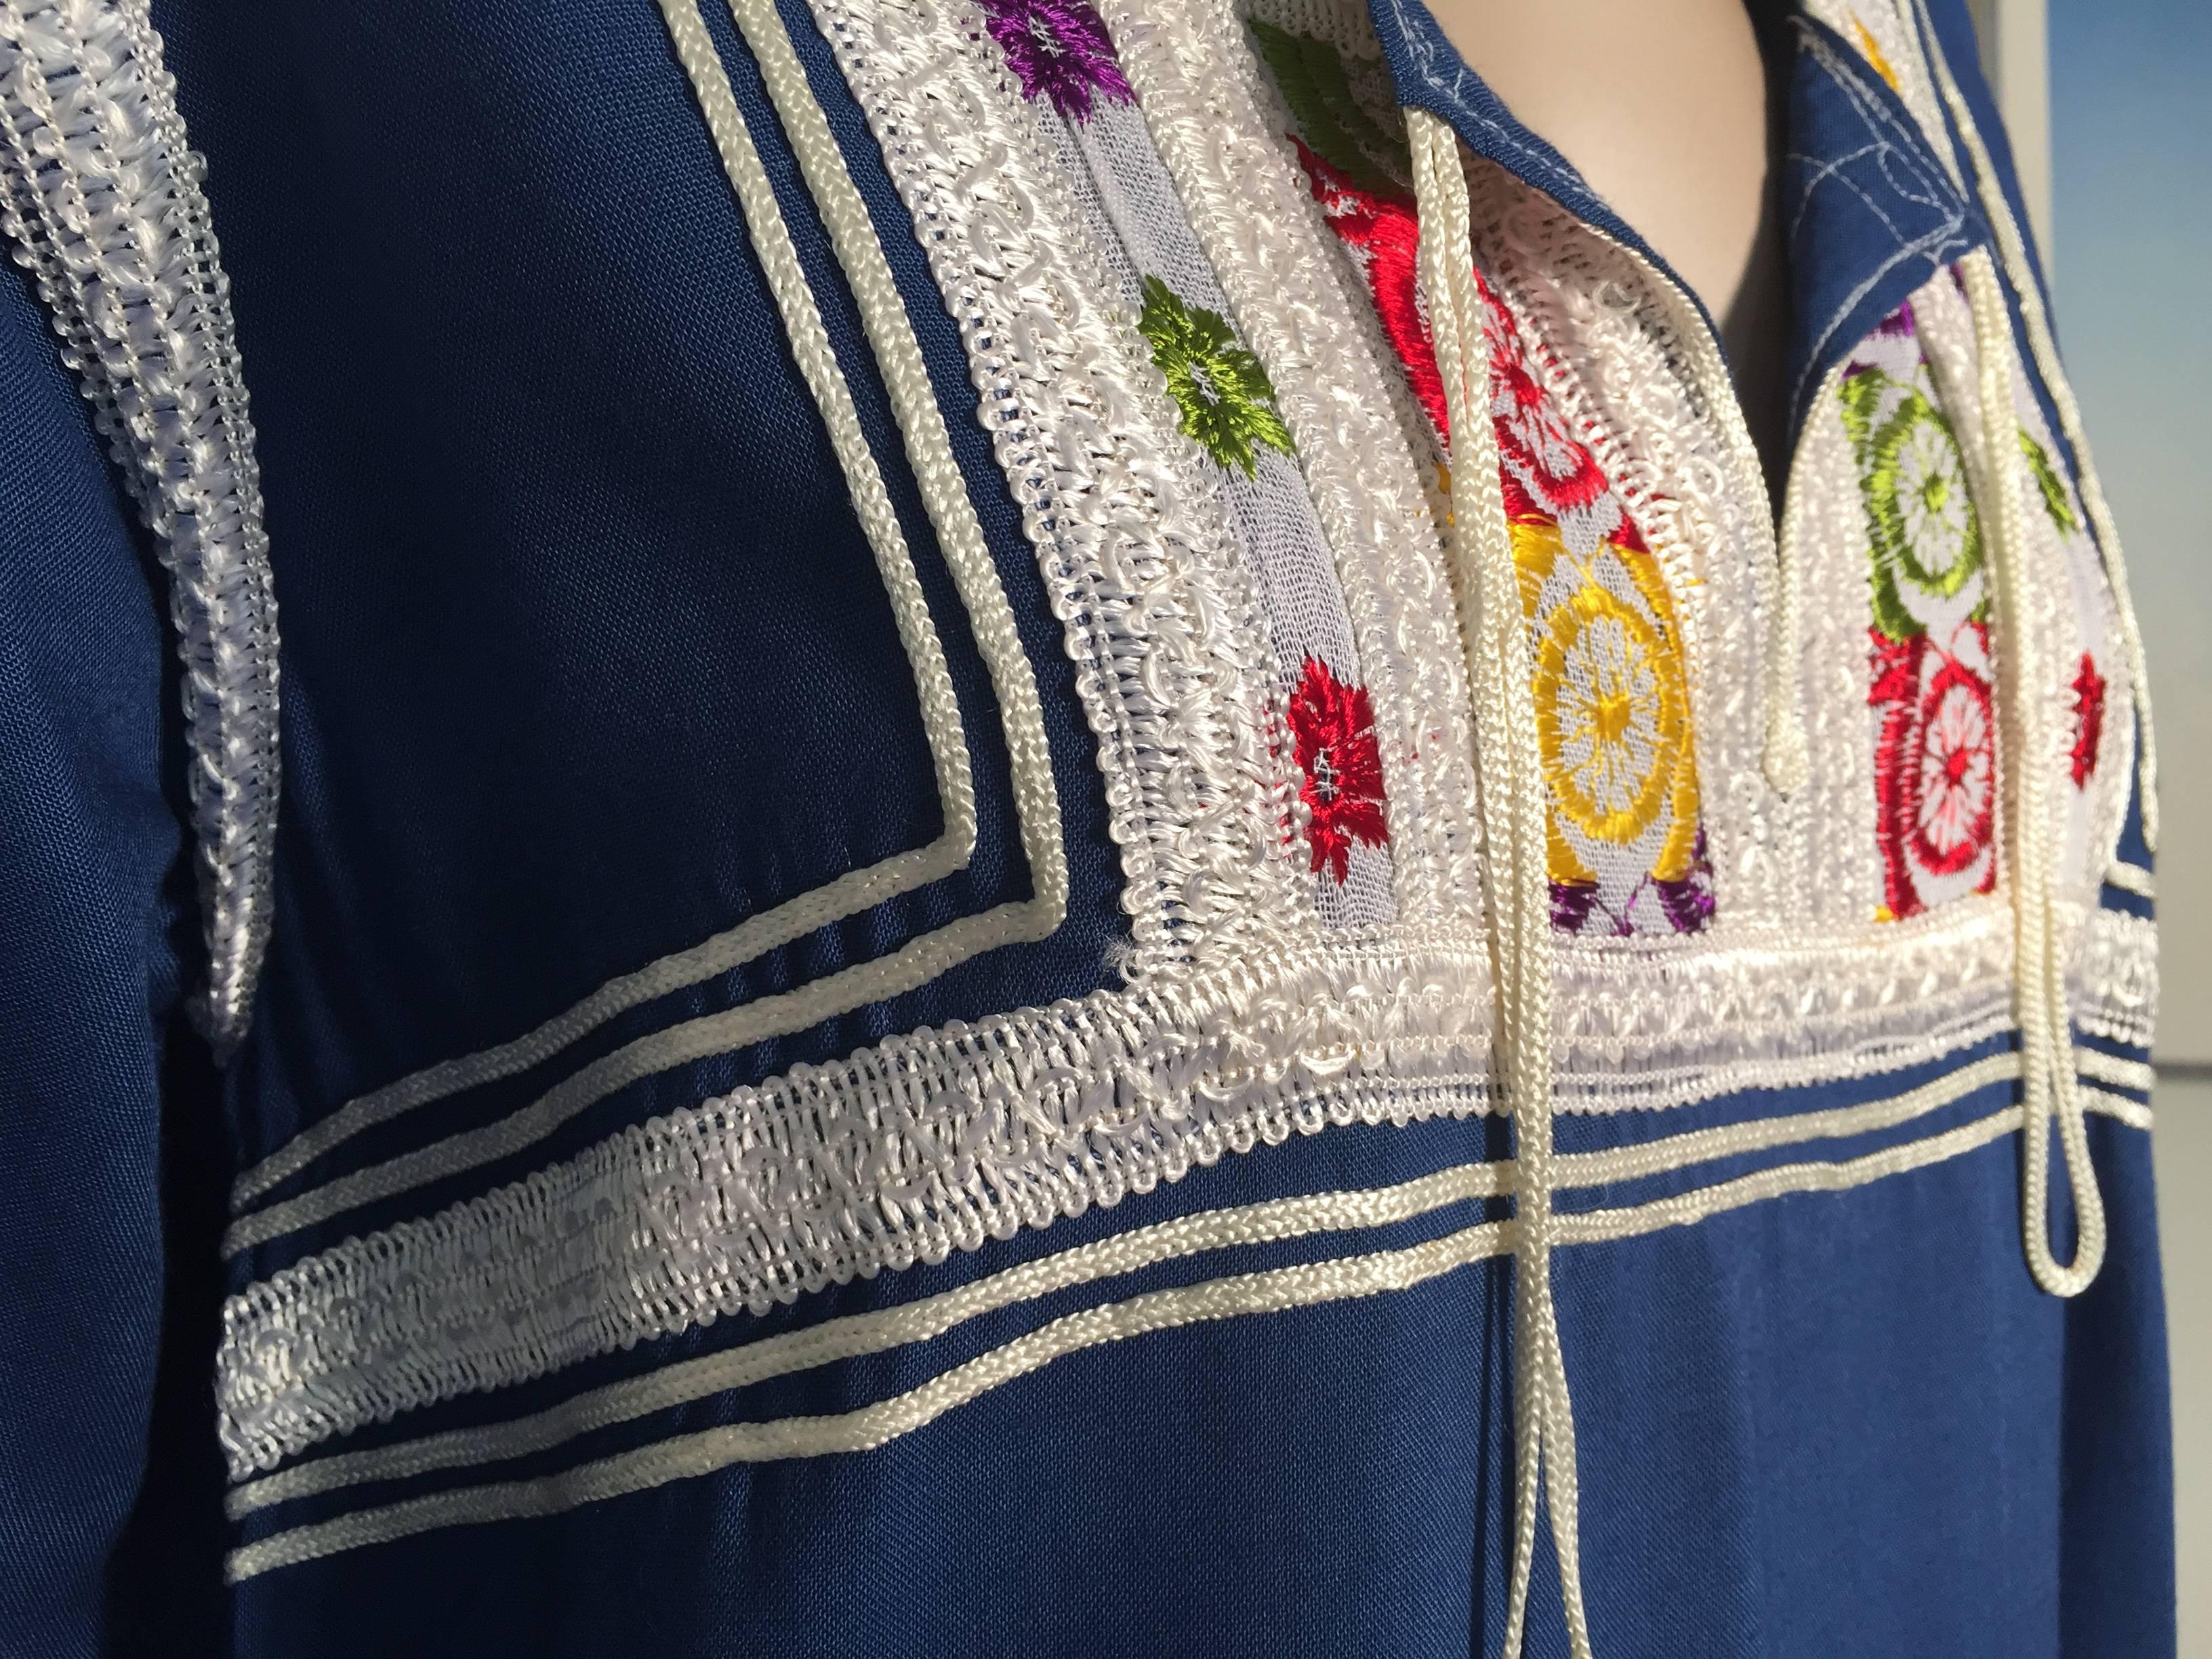 Embroidered Moroccan Vintage Blue Caftan, 1970 Maxi Dress Kaftan by Glenn Boston Size M For Sale